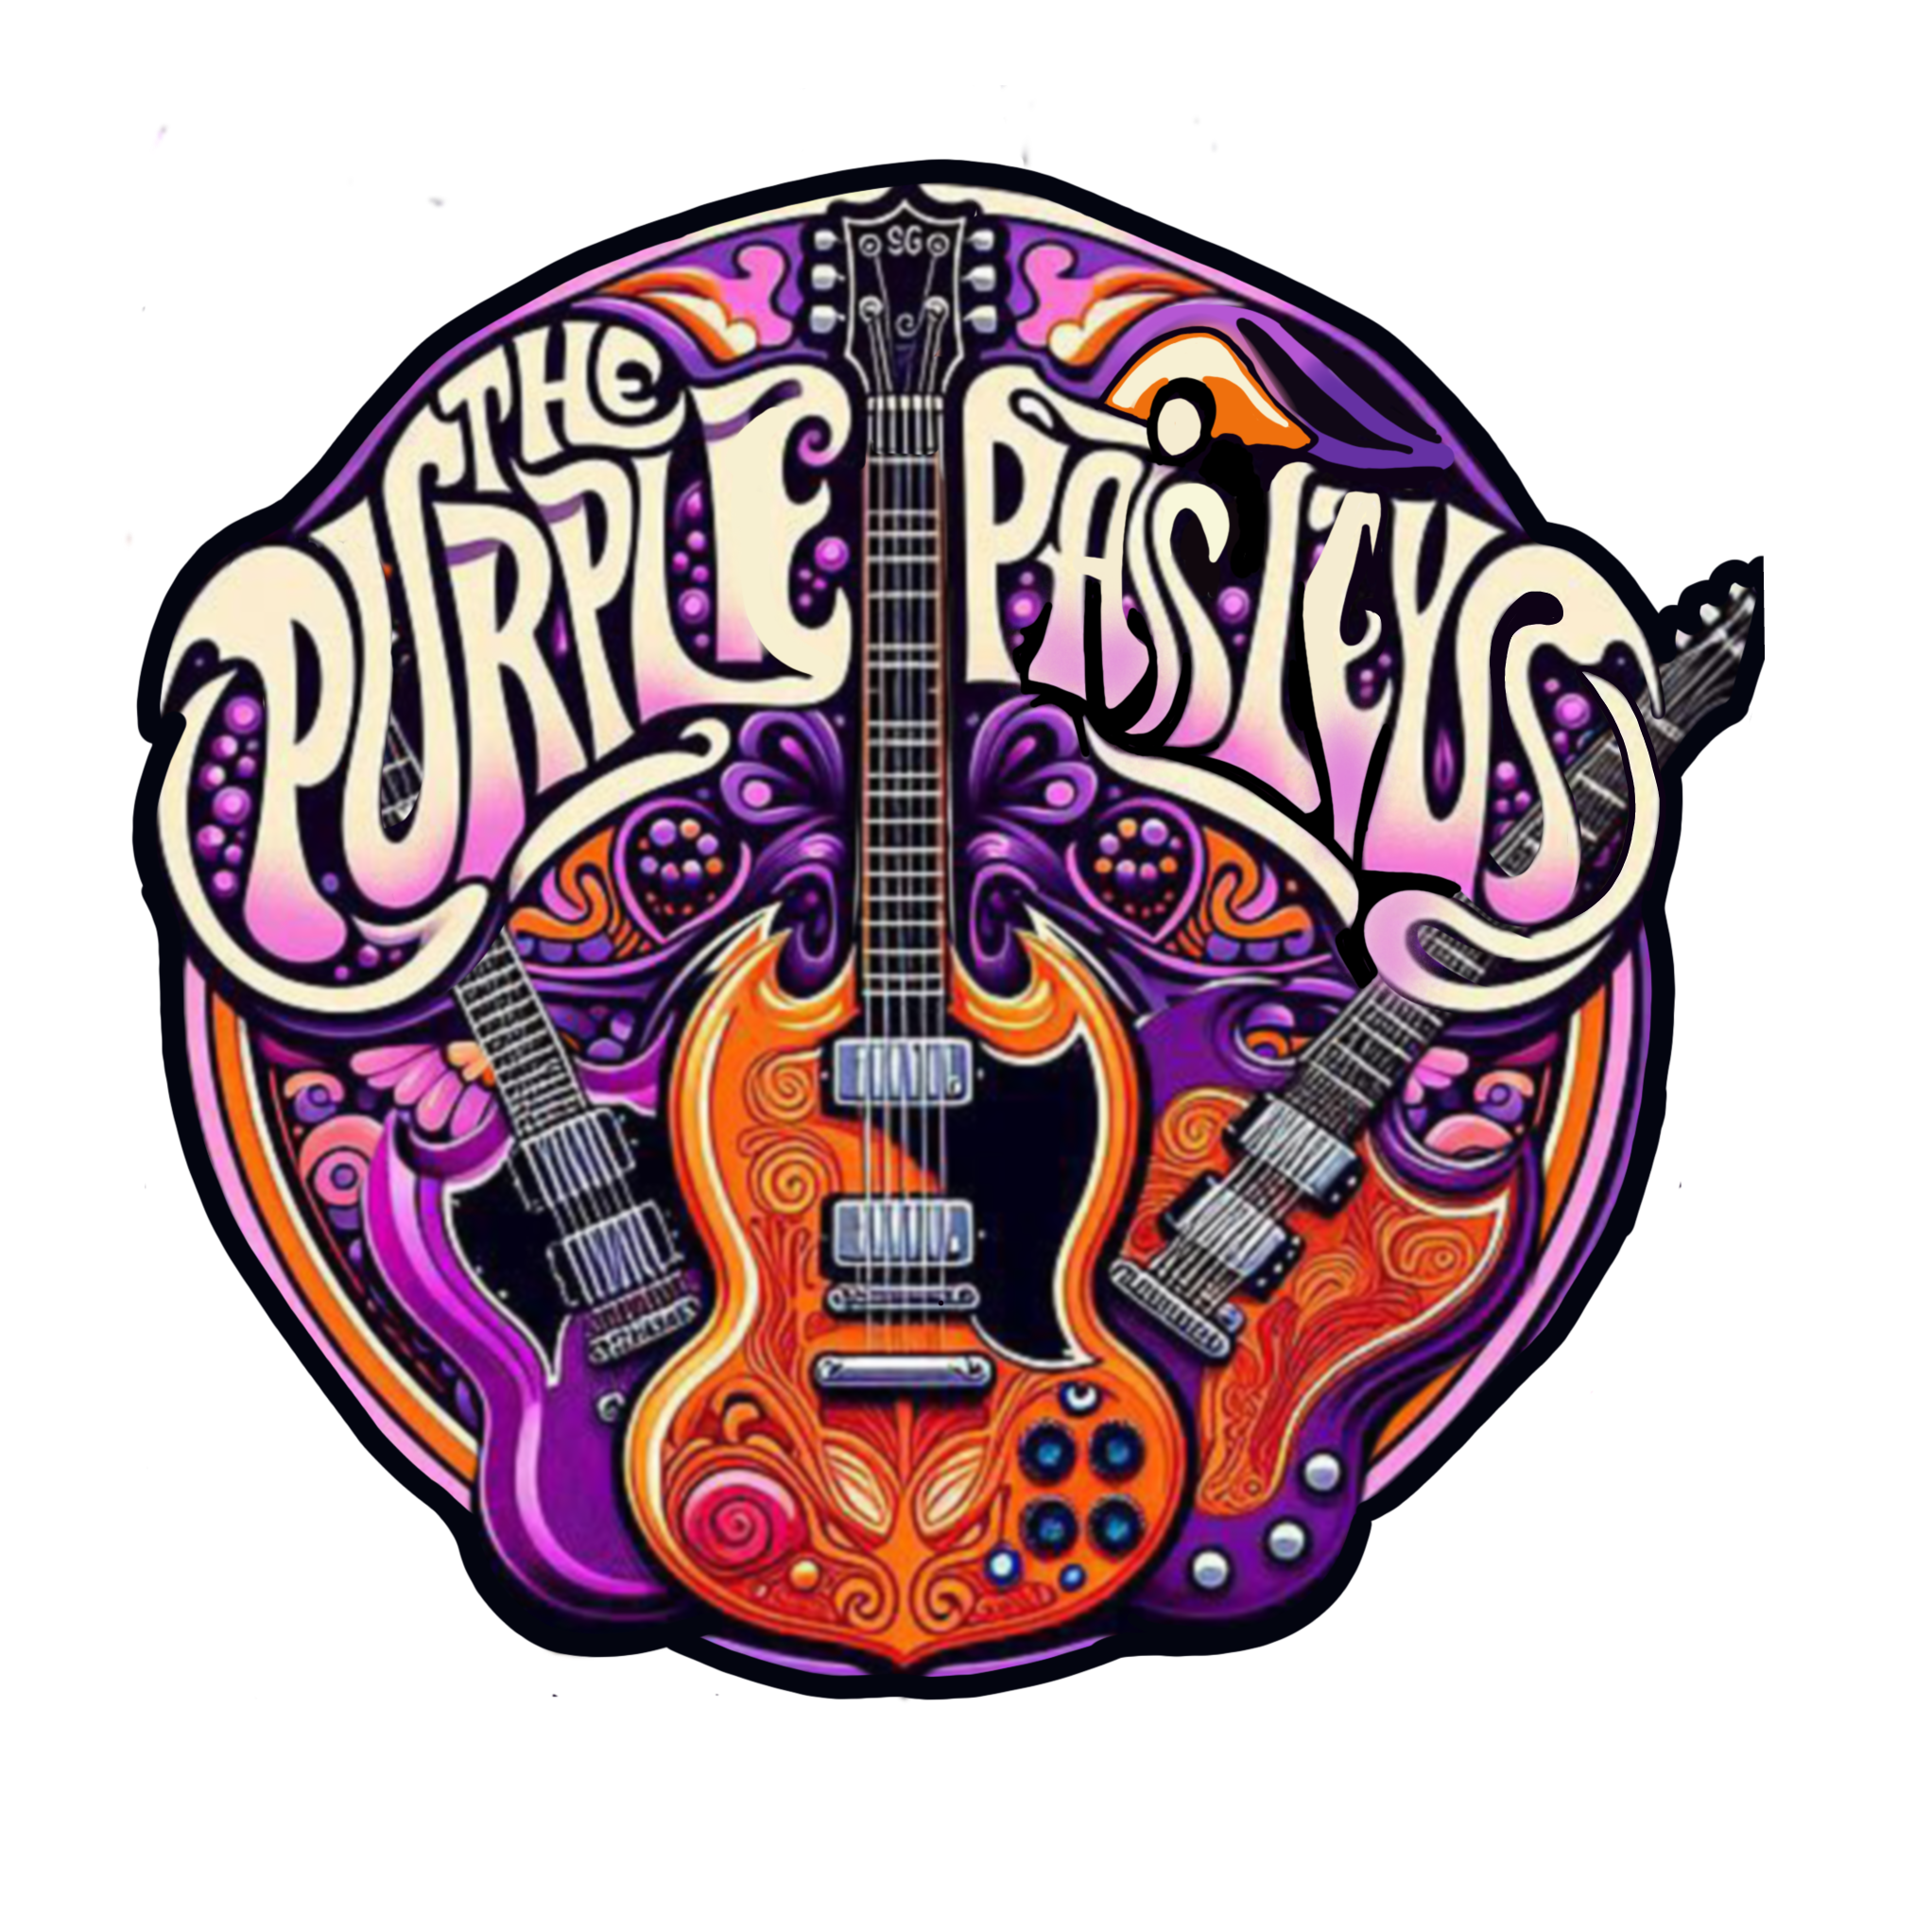 The Purple Paisleys